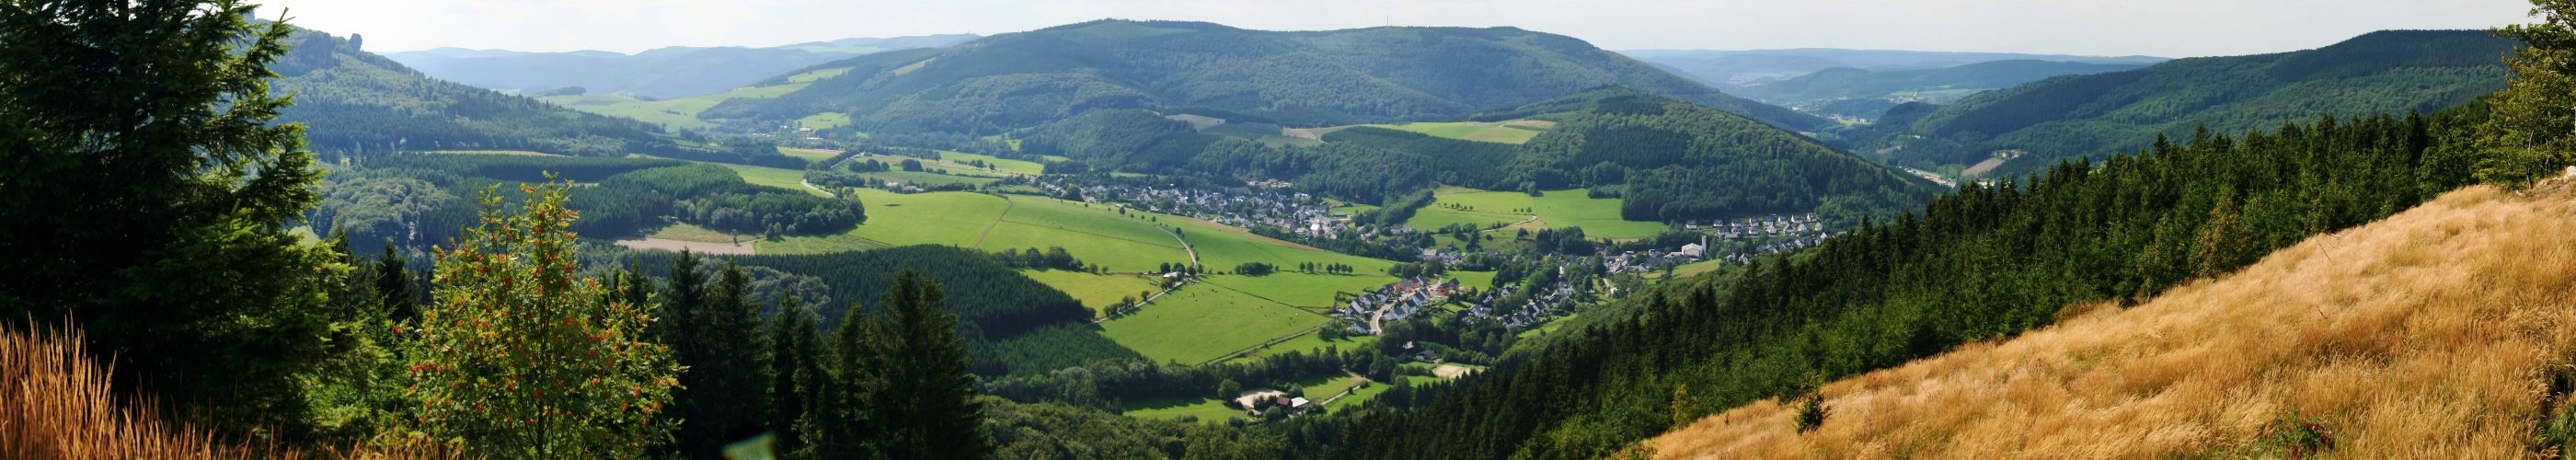 Panorama Bruchhausen/Ellleringhausen vom Ginsterkopf